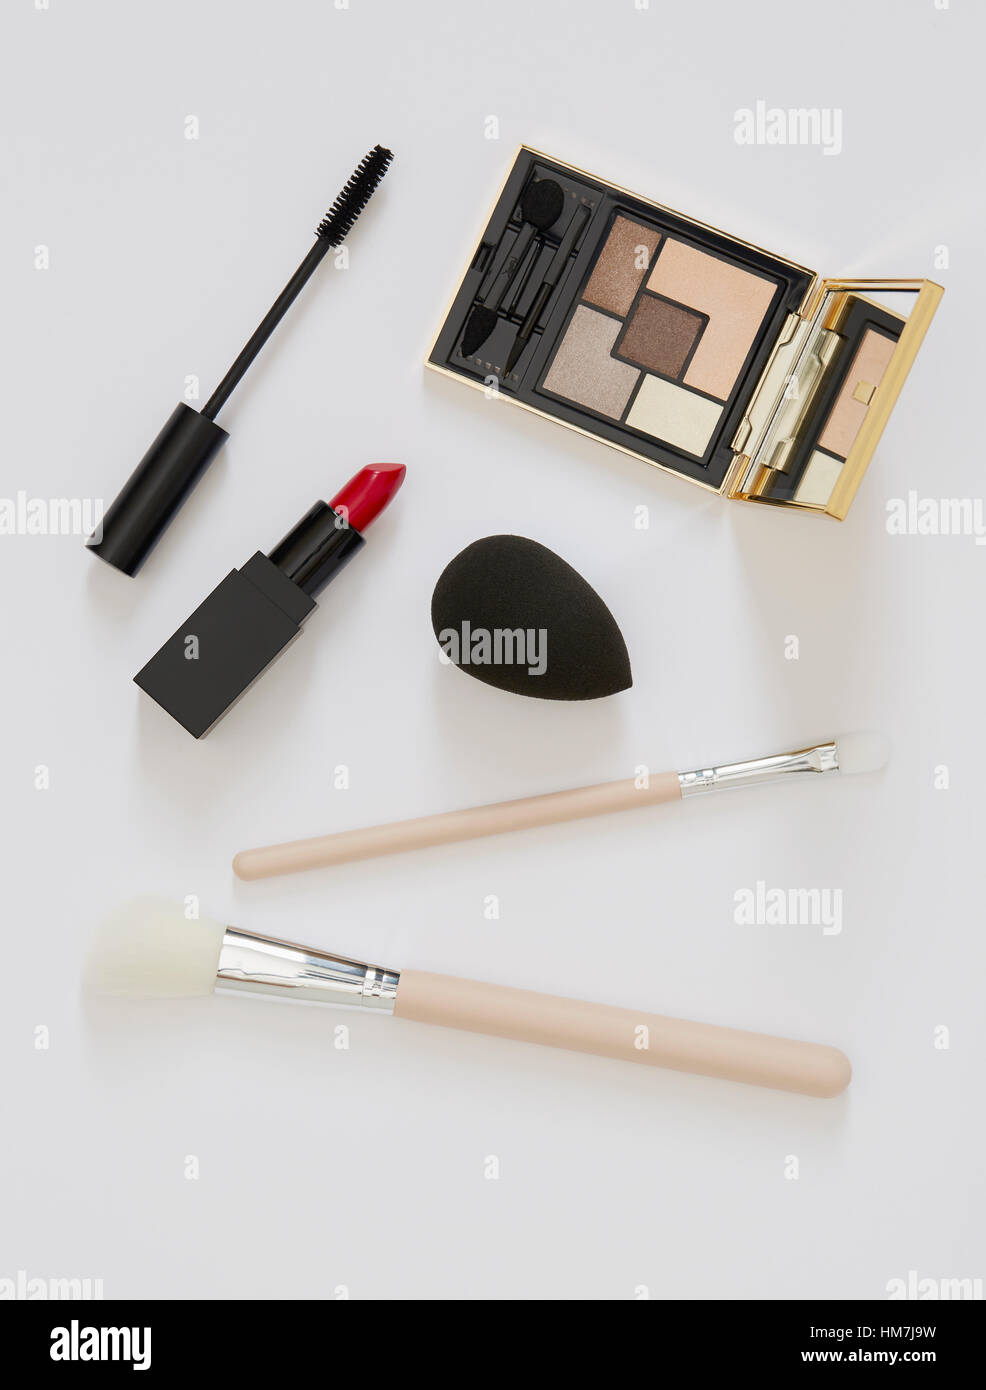 Cosmetics against white background Stock Photo